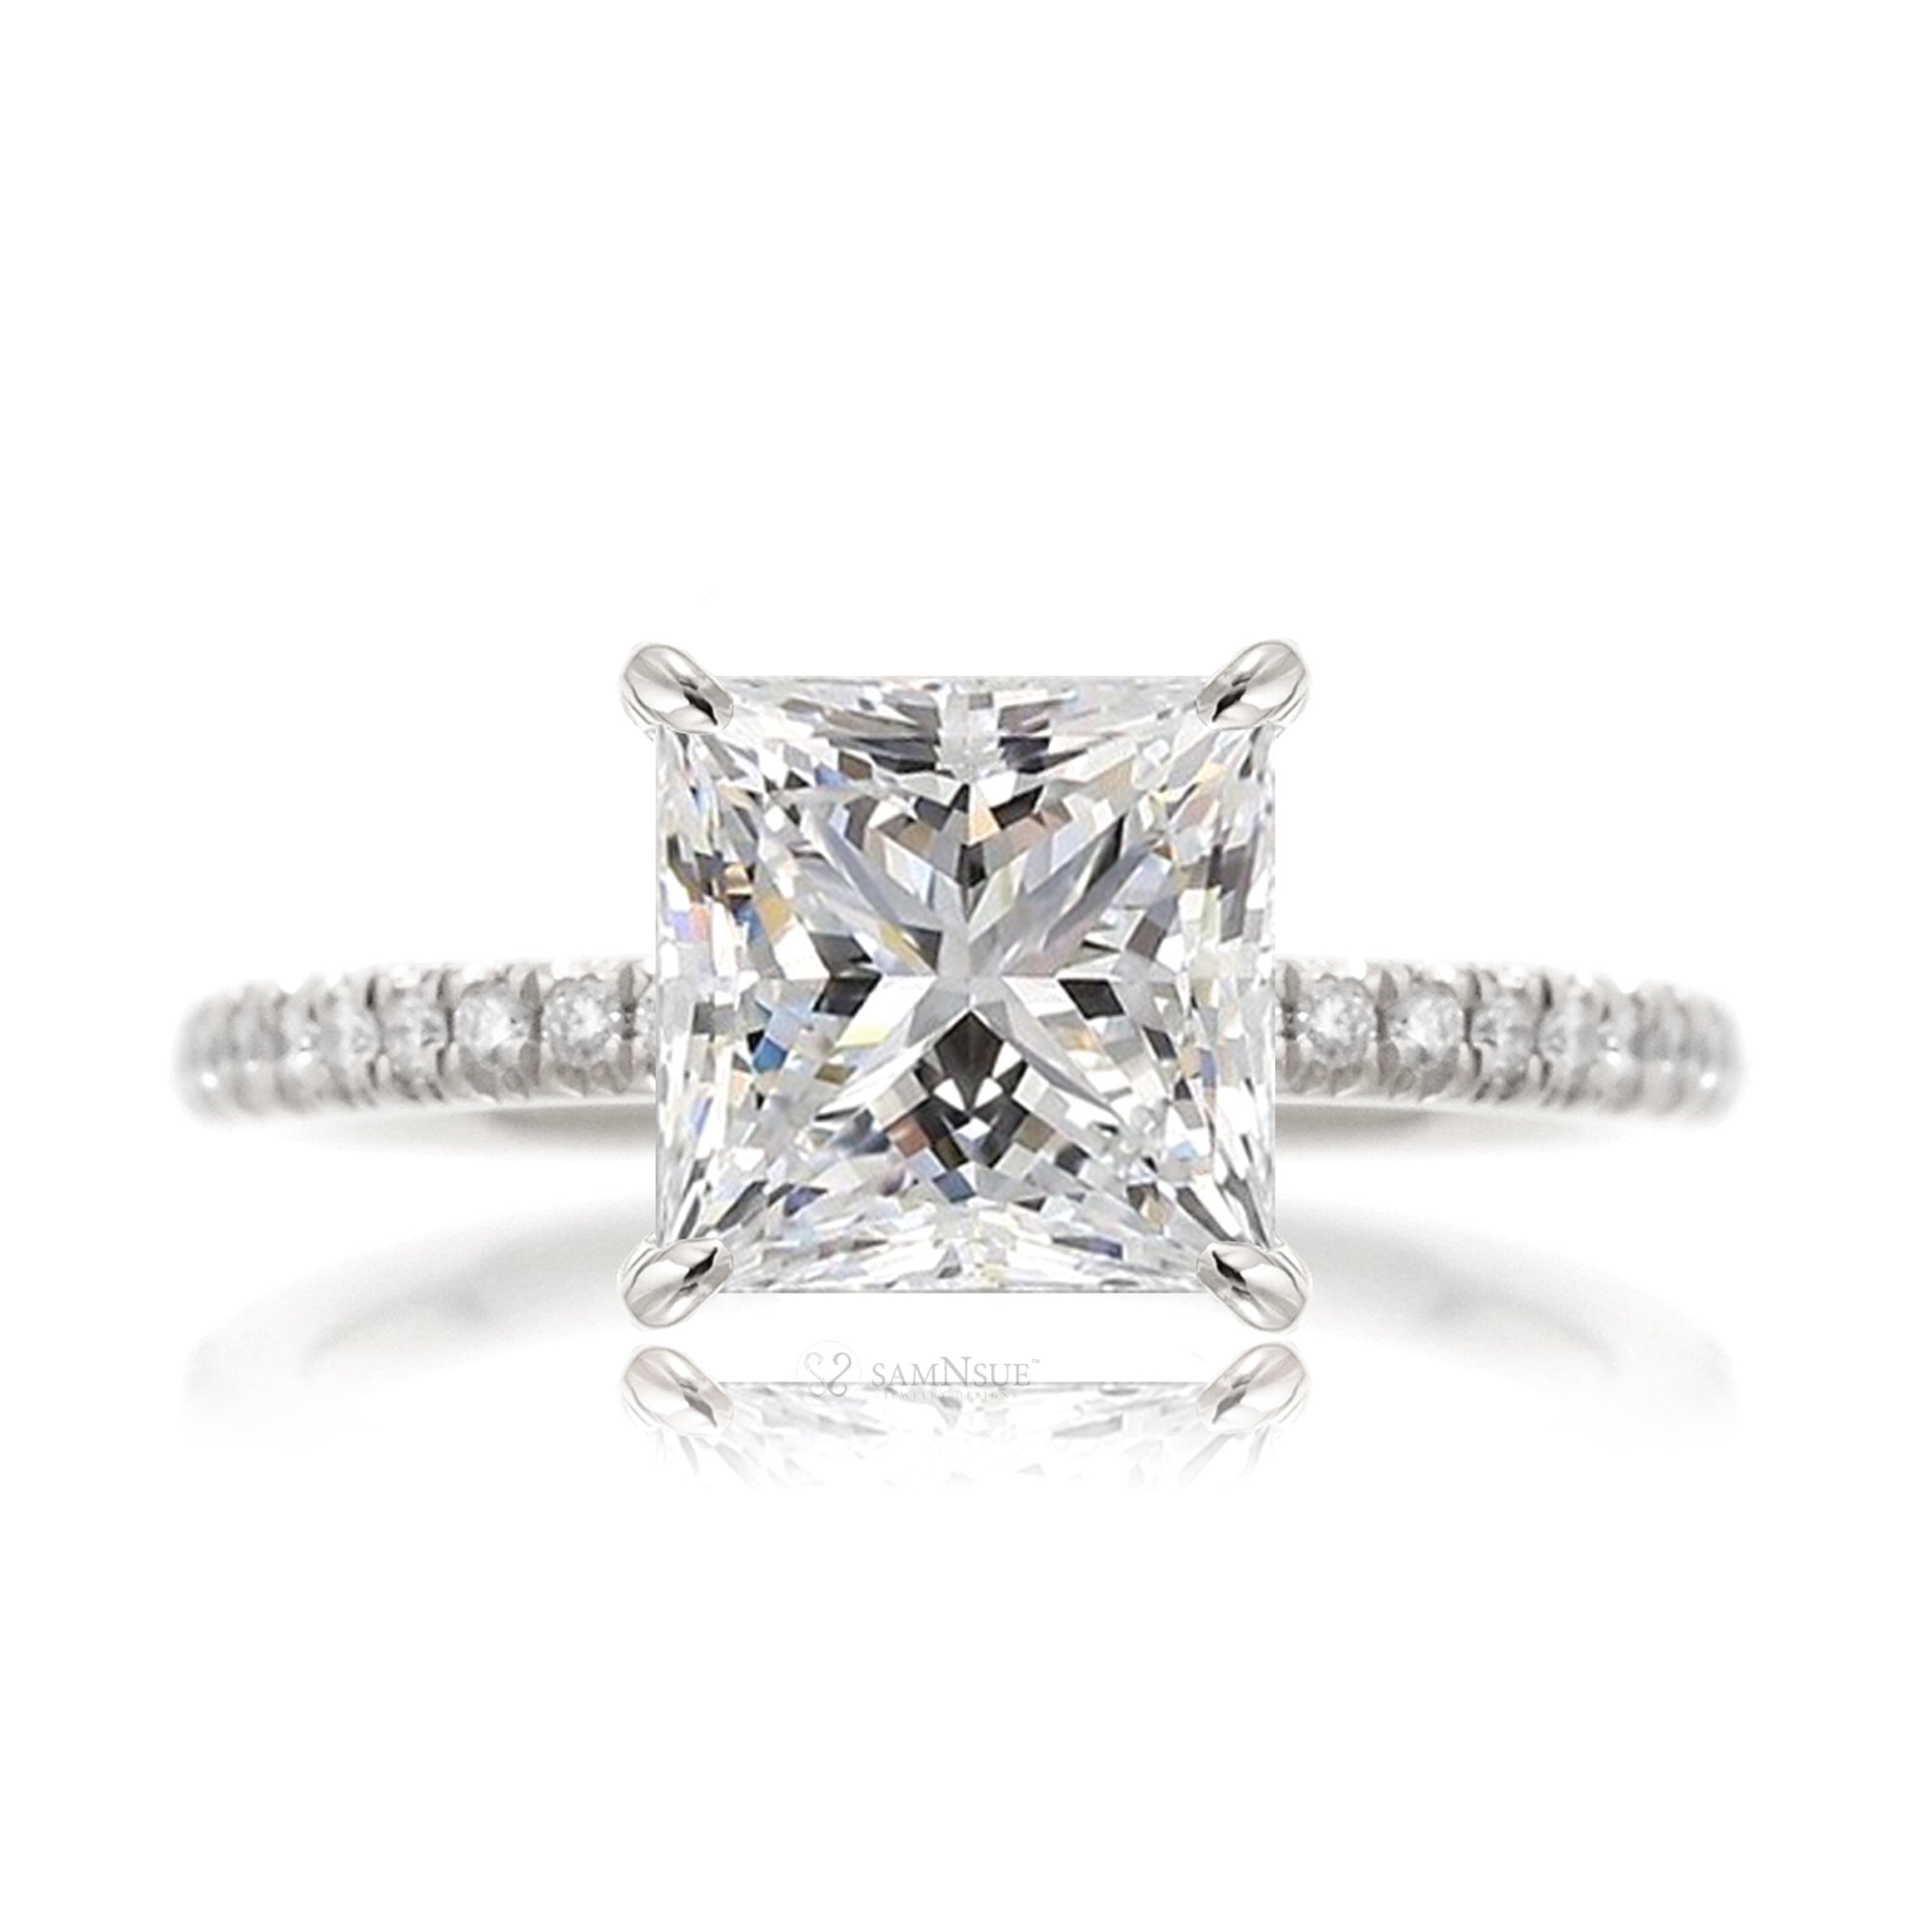 Princess cut lab-grown diamond engagement ring white gold - The Ava